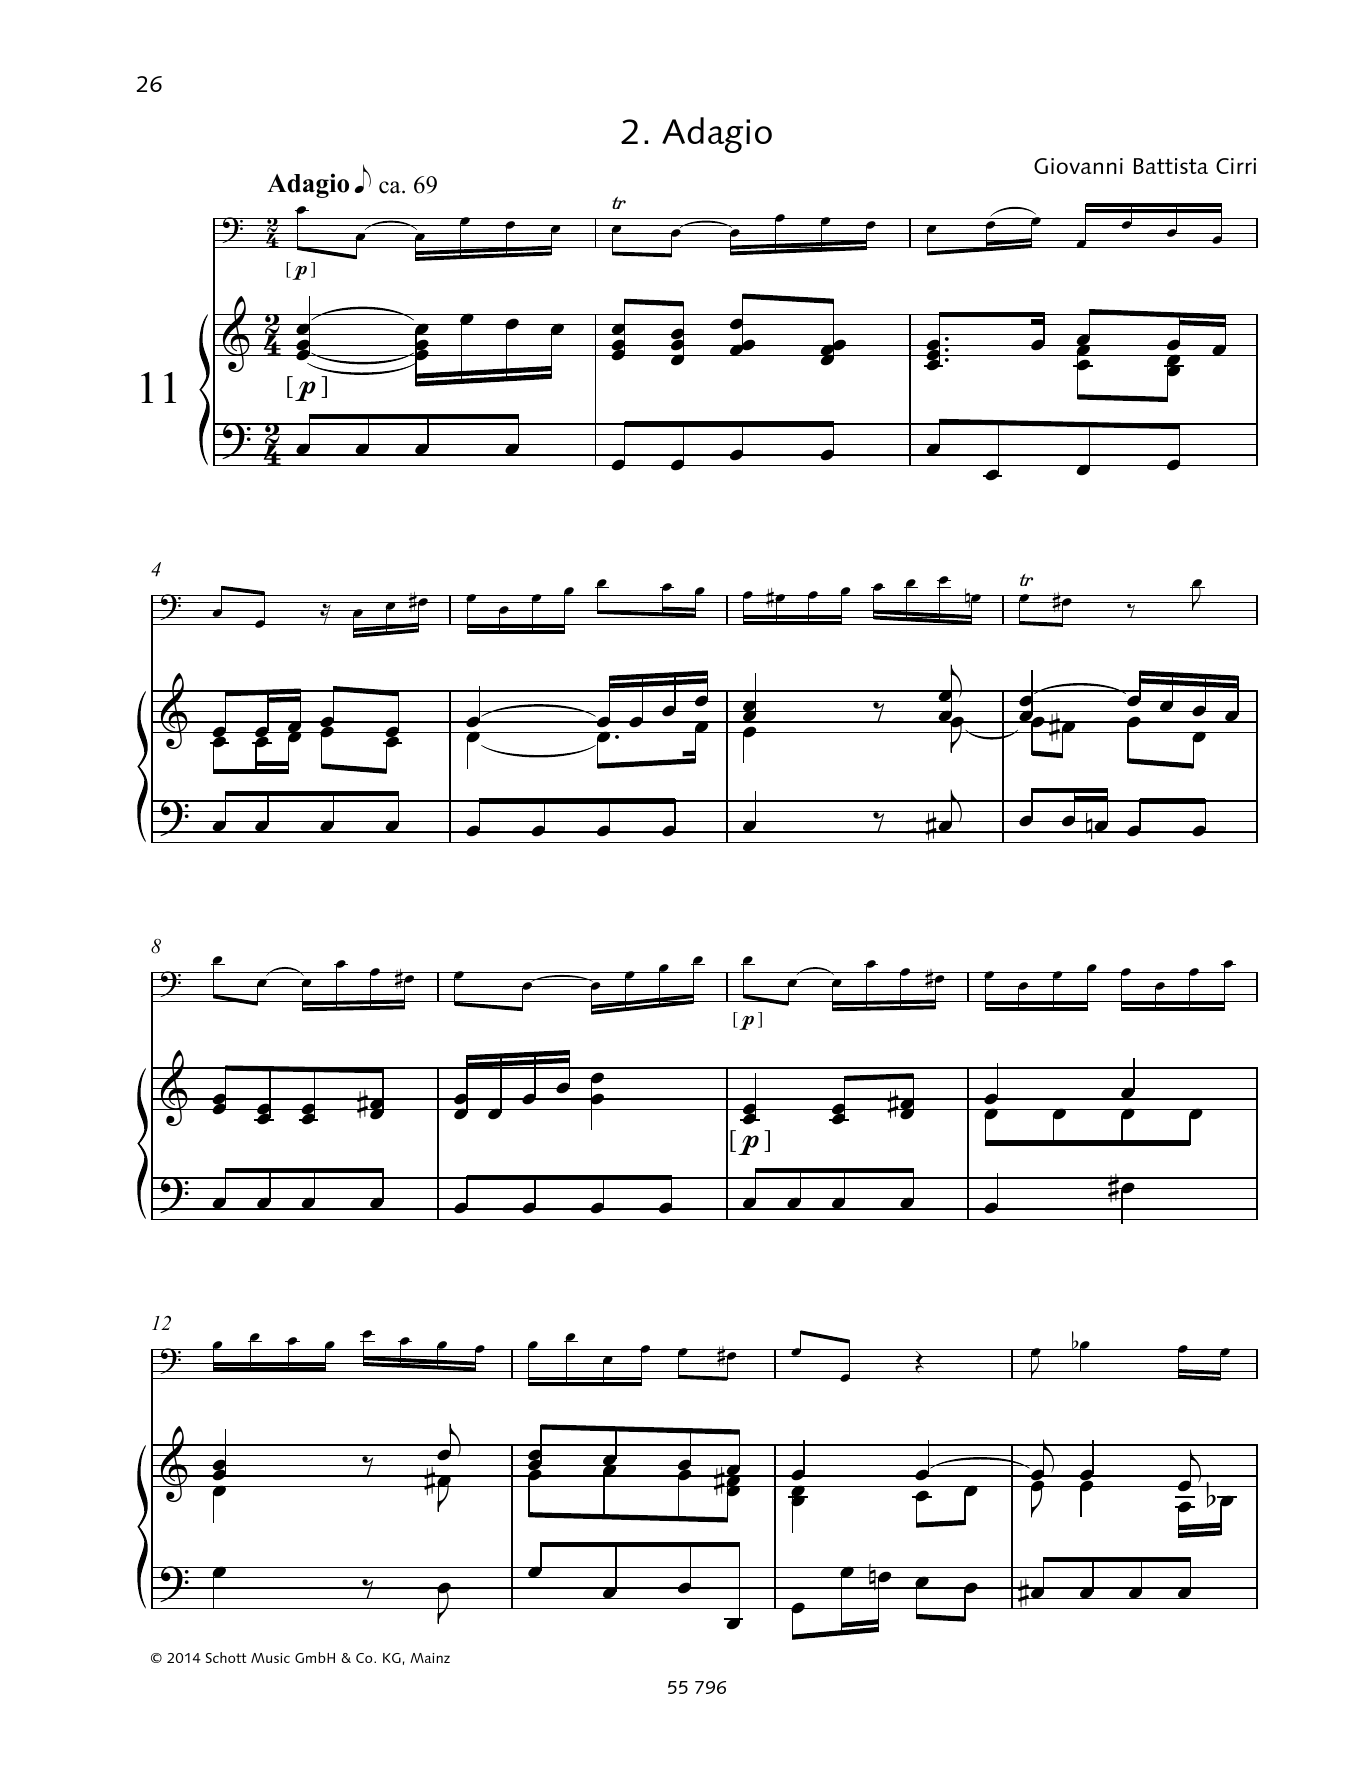 Download Giovanni Battista Cirri Adagio Sheet Music and learn how to play String Solo PDF digital score in minutes